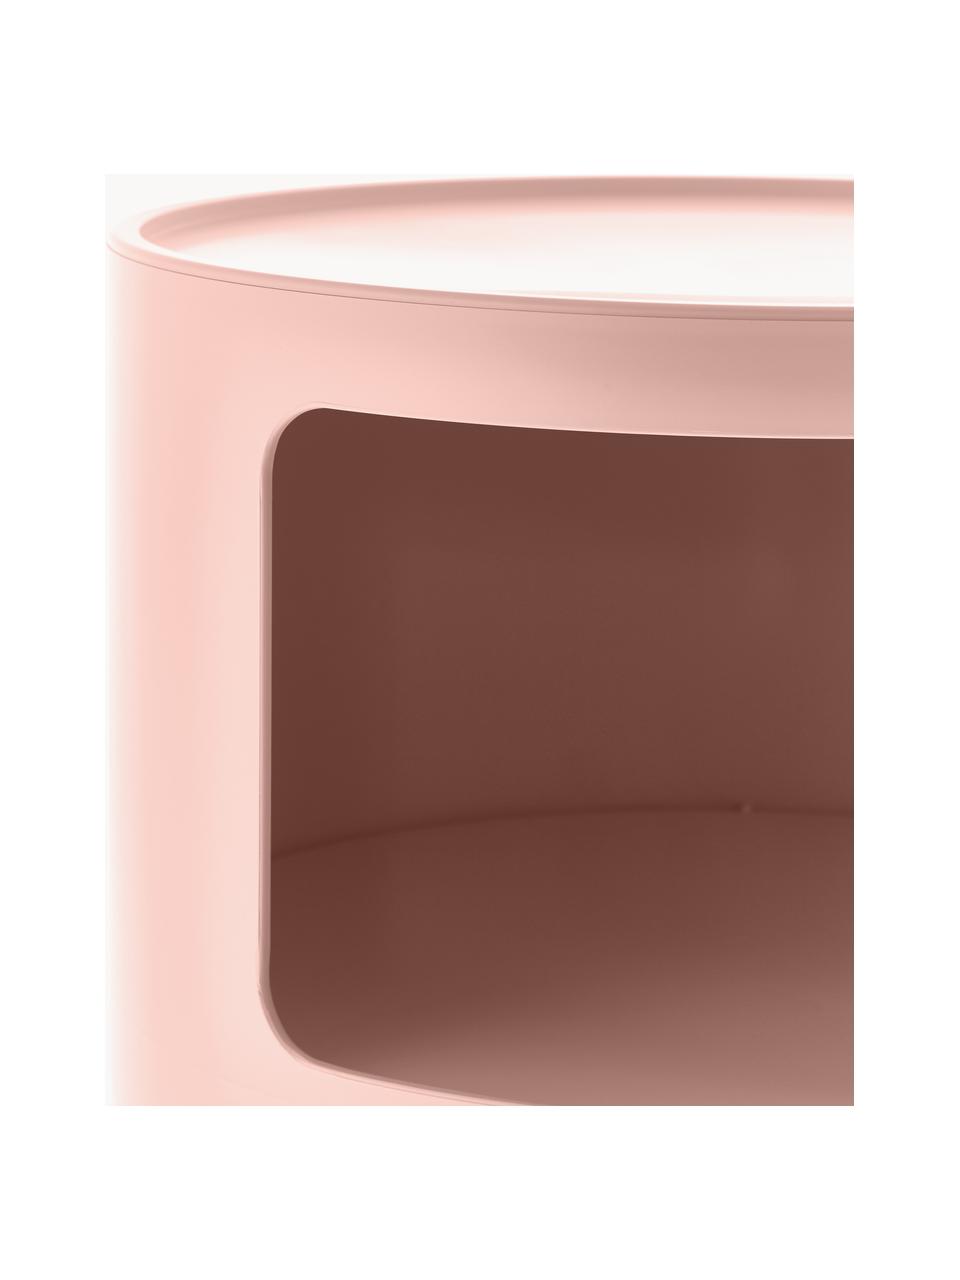 Designový odkládací stolek Componibili, 3 moduly, 100 % biopolymer z obnovitelných surovin, Matná starorůžová, Ø 32 cm, V 59 cm